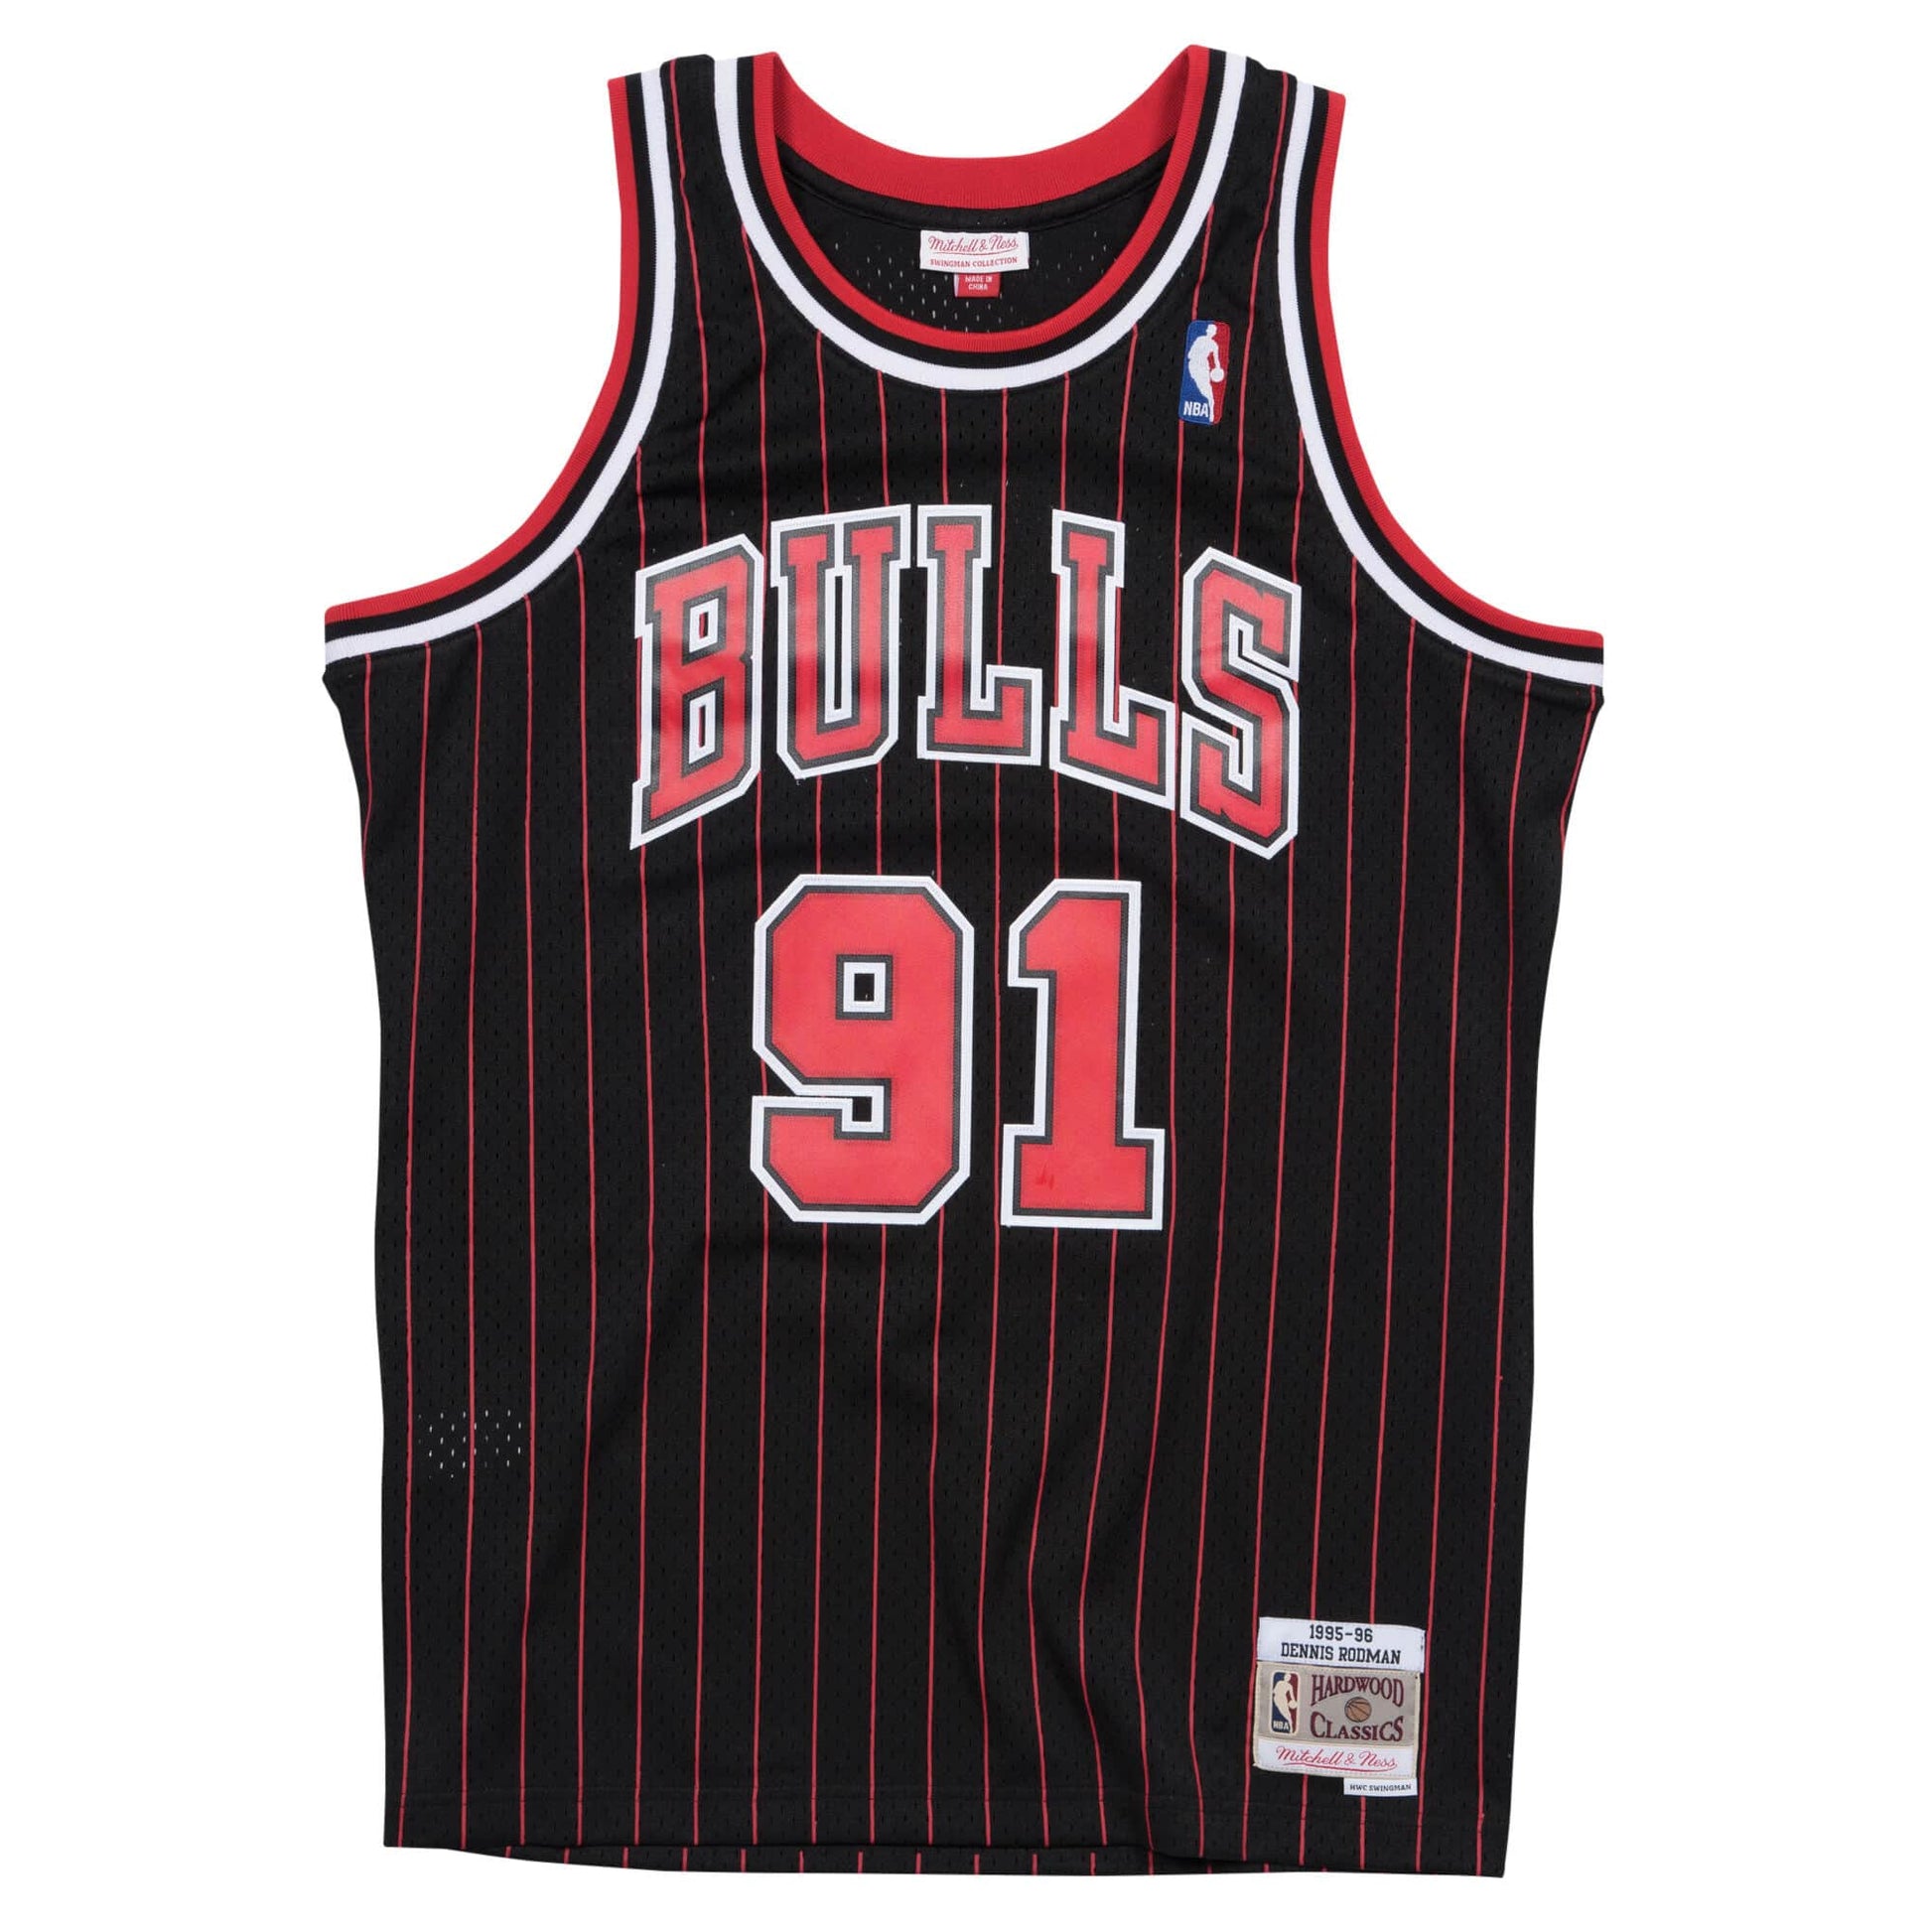 Hardwood classics Mitchell & ness NBA Dennis Rodman 91 T-shirt